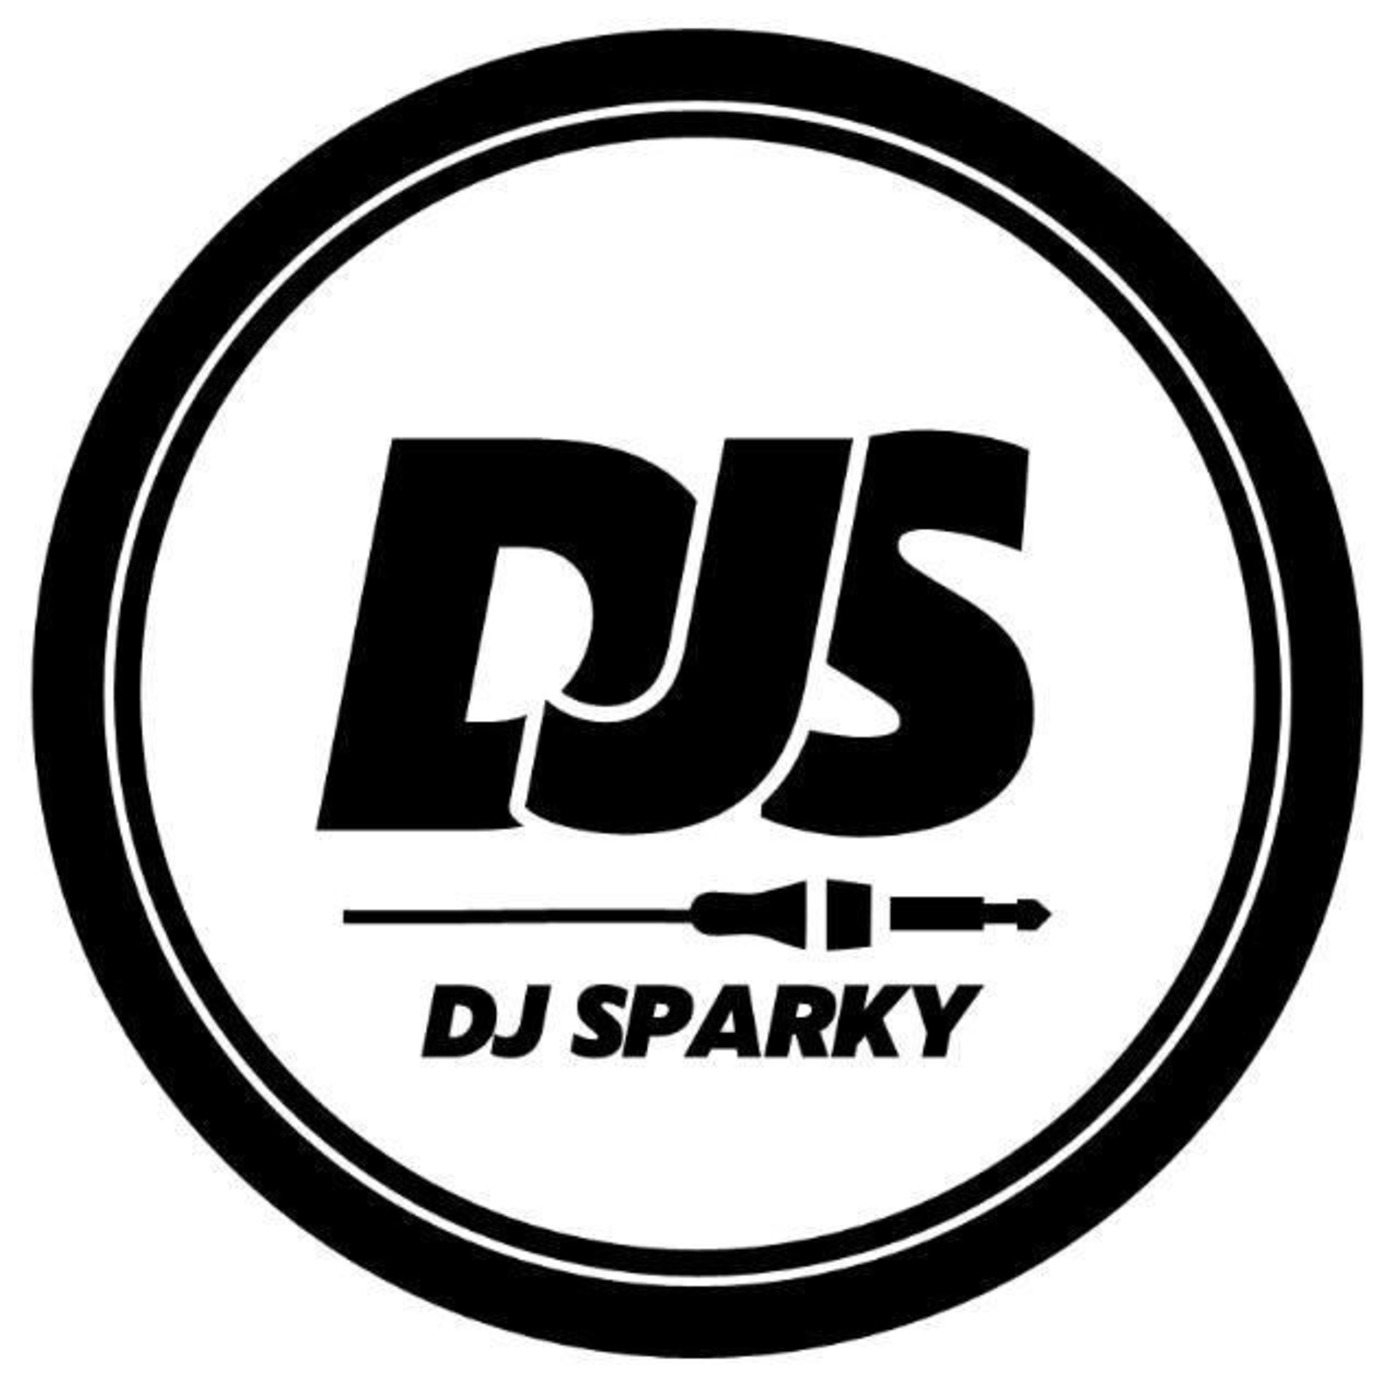 FlASHY VYBE ONE  MINI-MIX  EPISODE  [1]  DJ SPARKY KENYA-palace 1